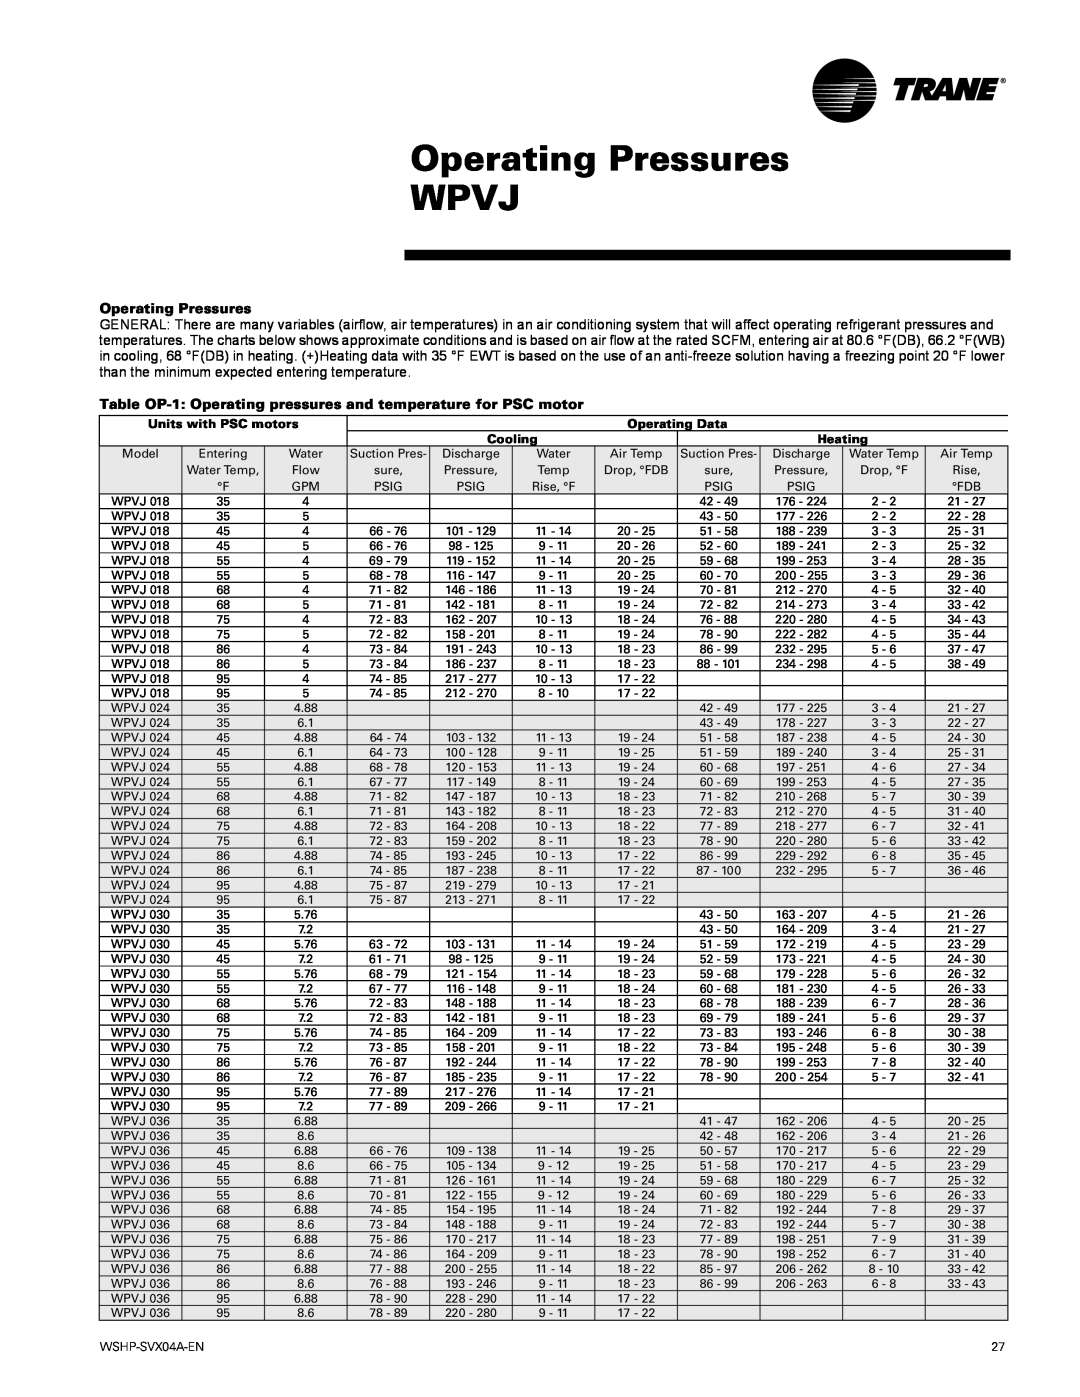 Trane WPHF manual Operating Pressures WPVJ 